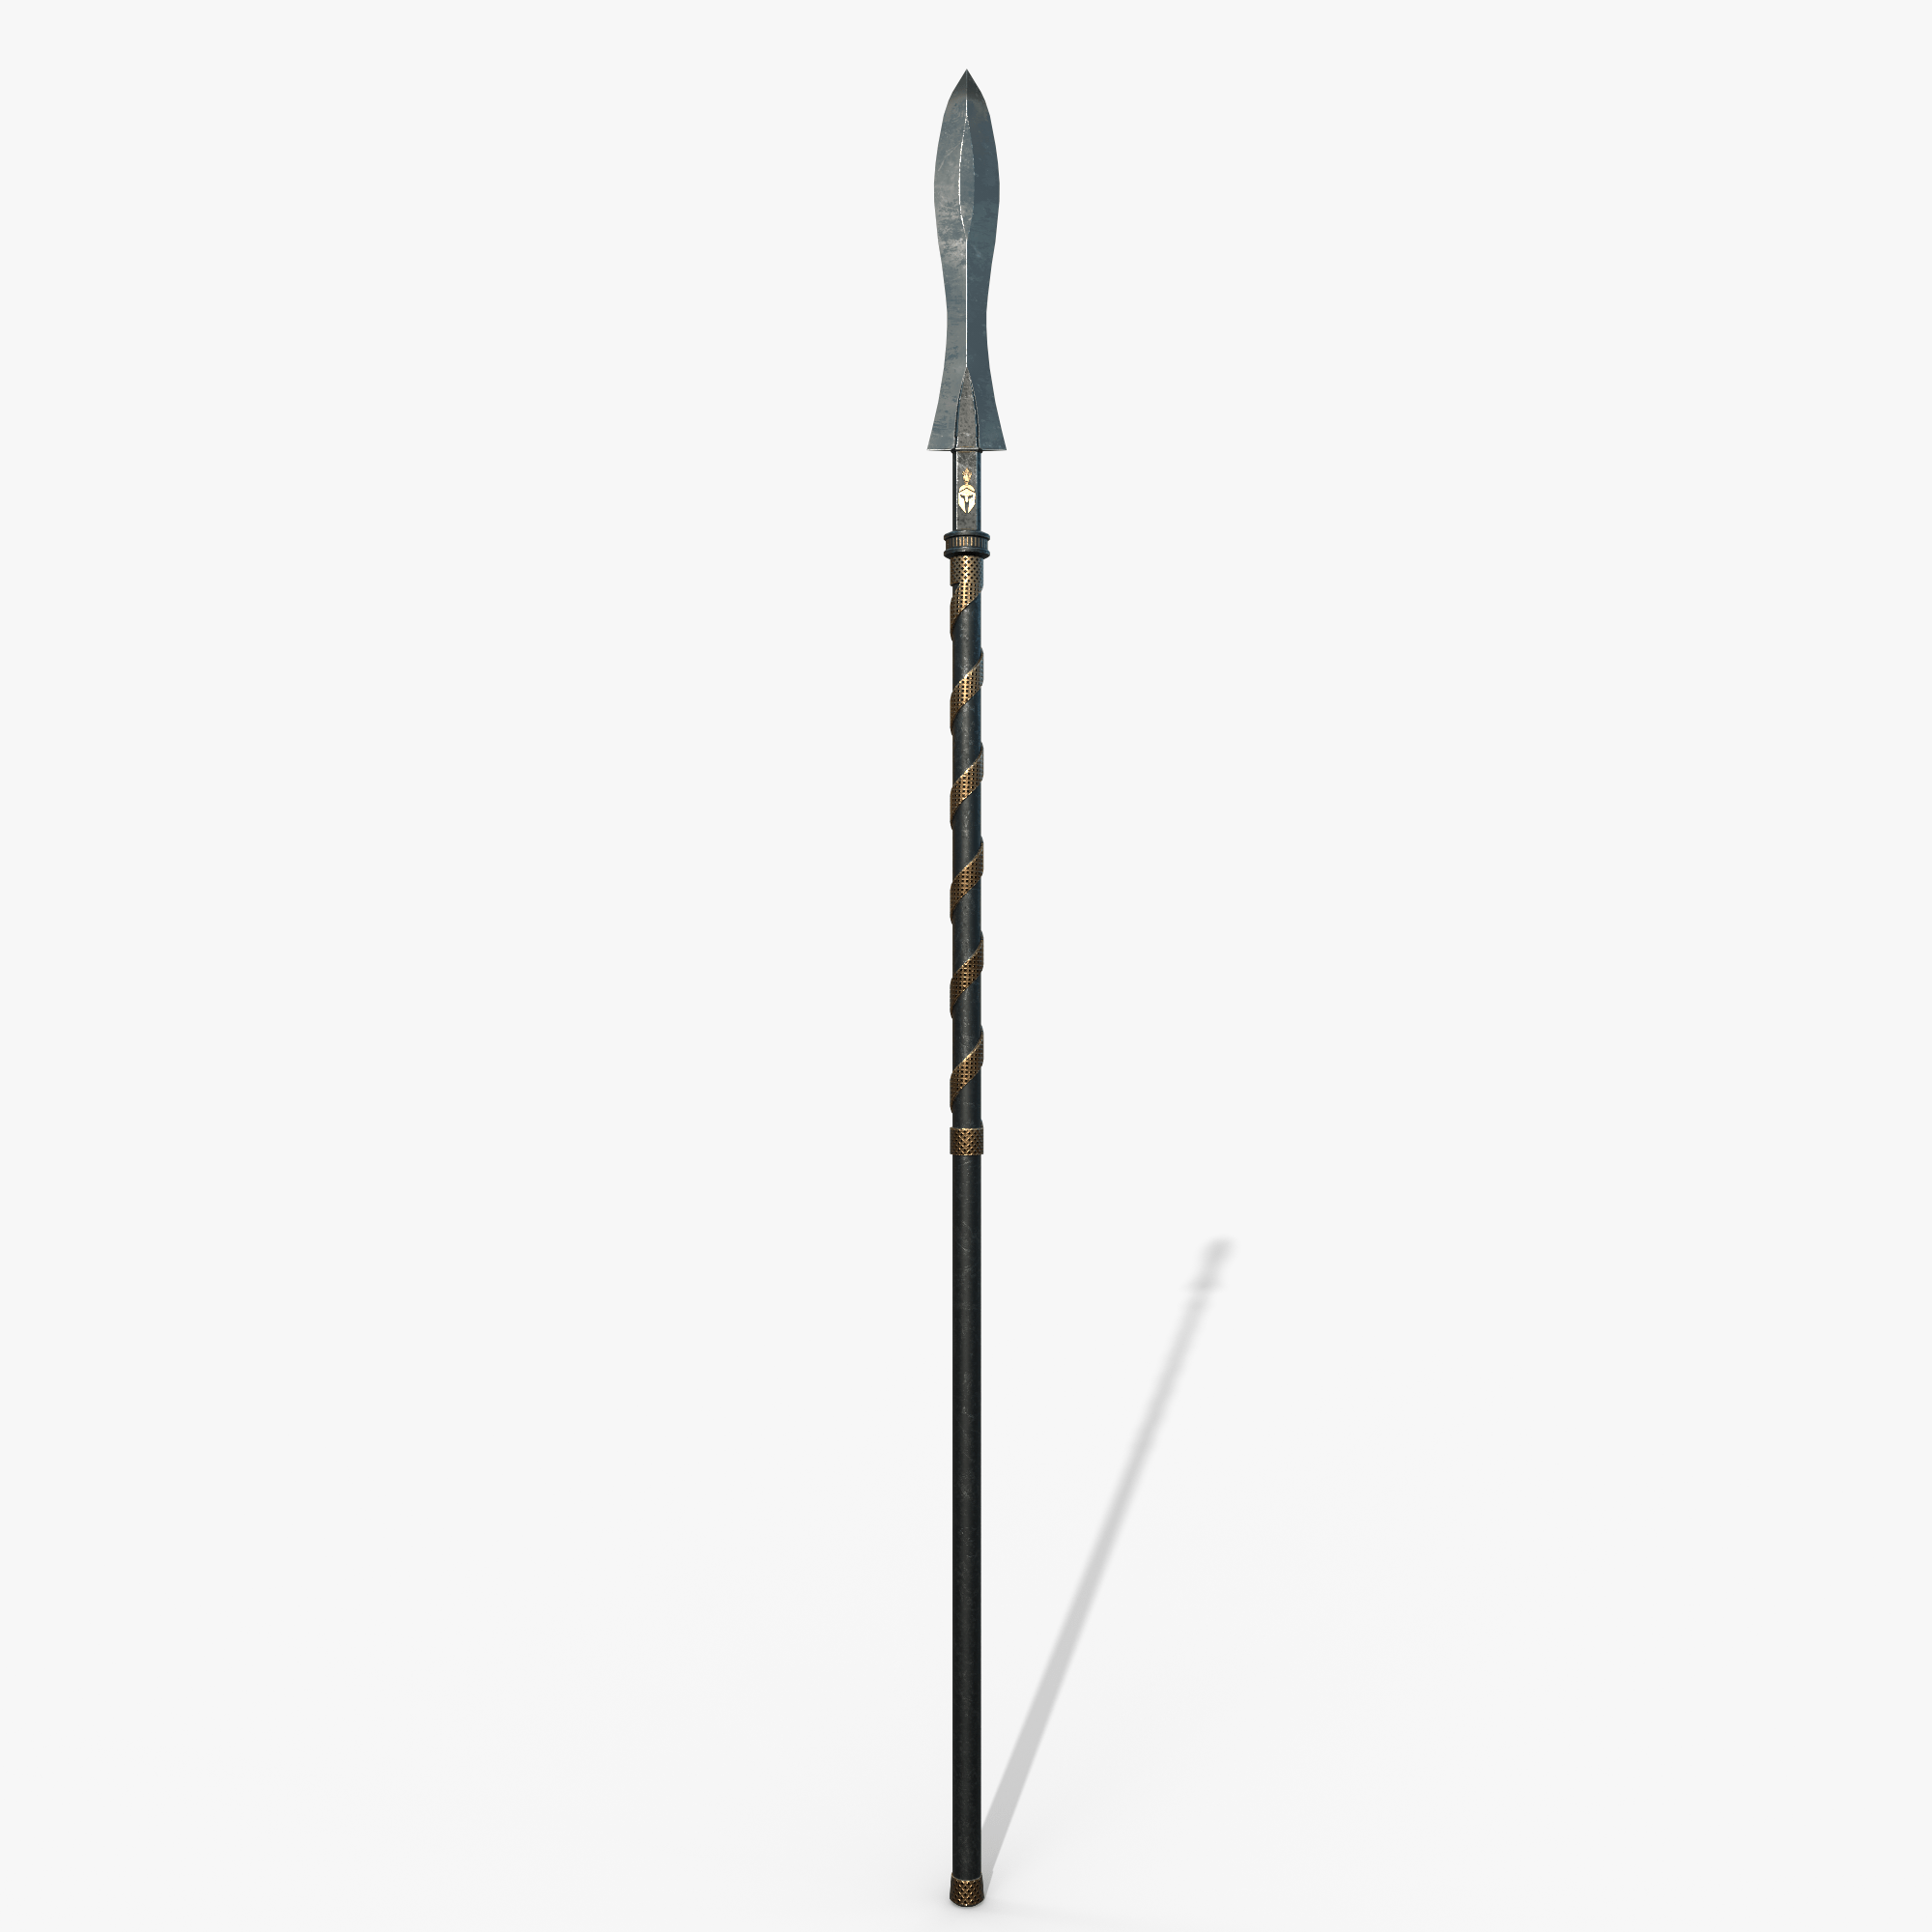 Spartan spear by Amazing_Zonder | 3DOcean